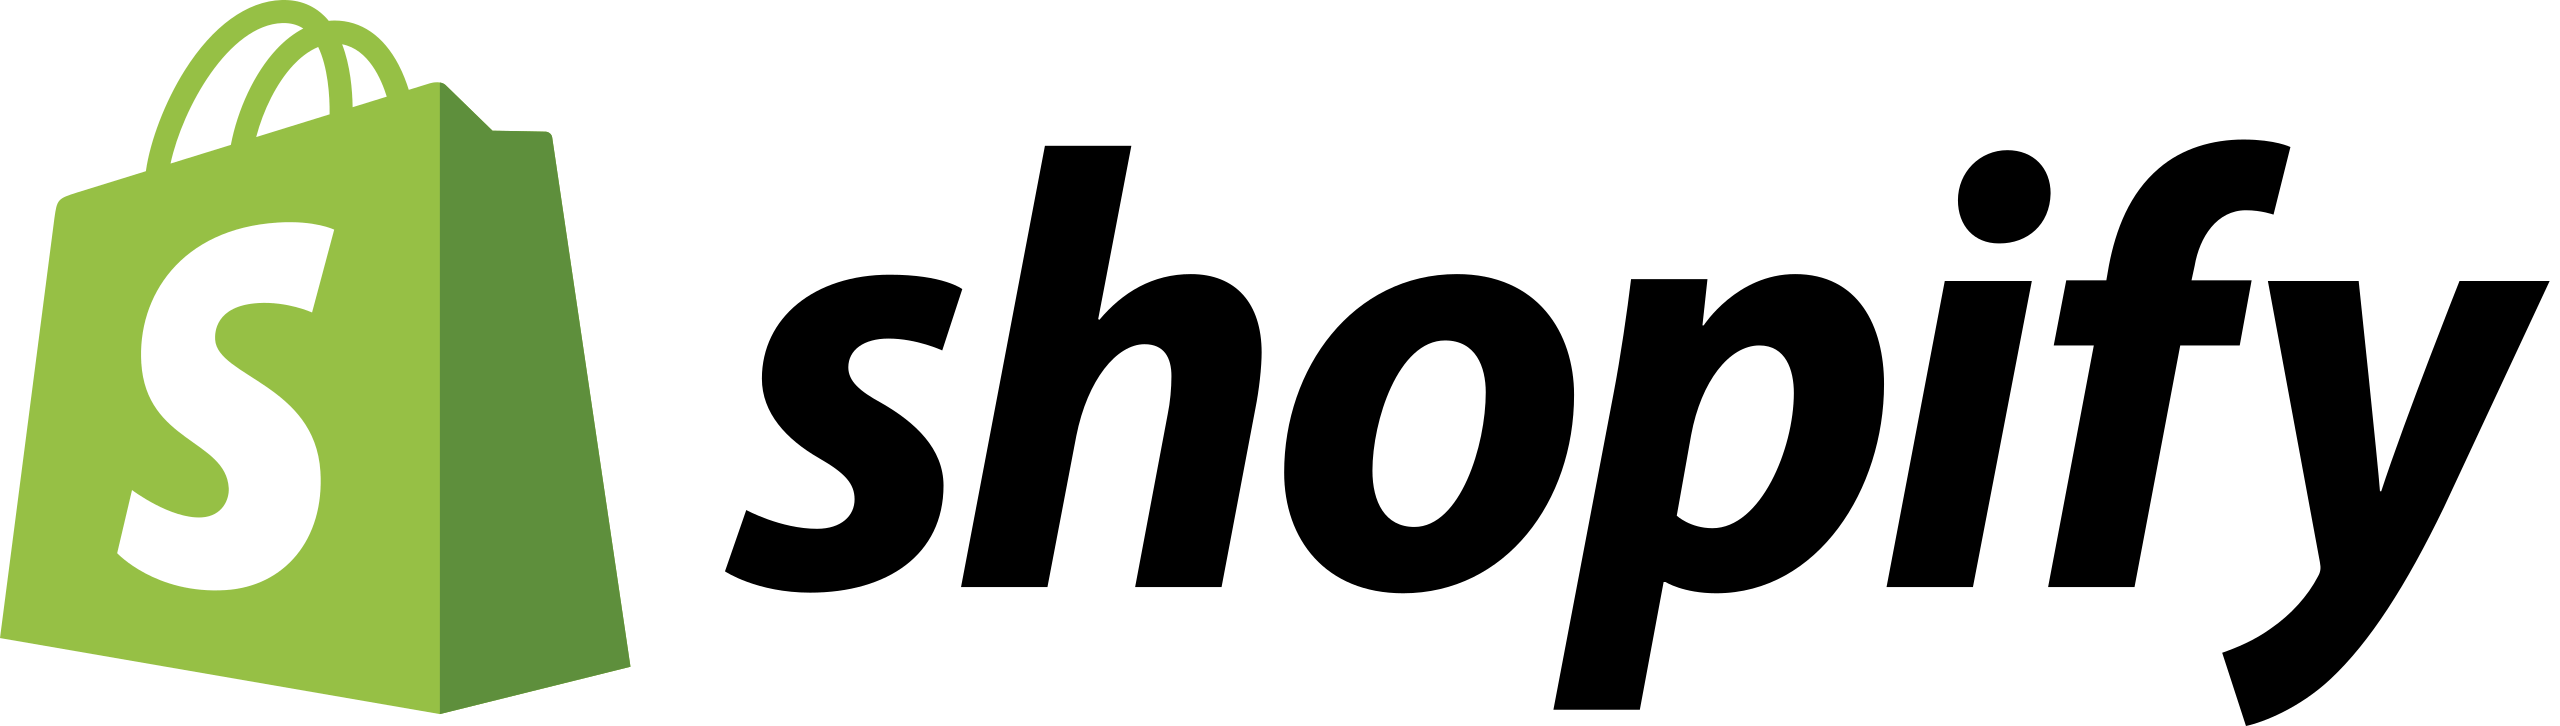 Digital Marketing Course in Nashik - Shopify